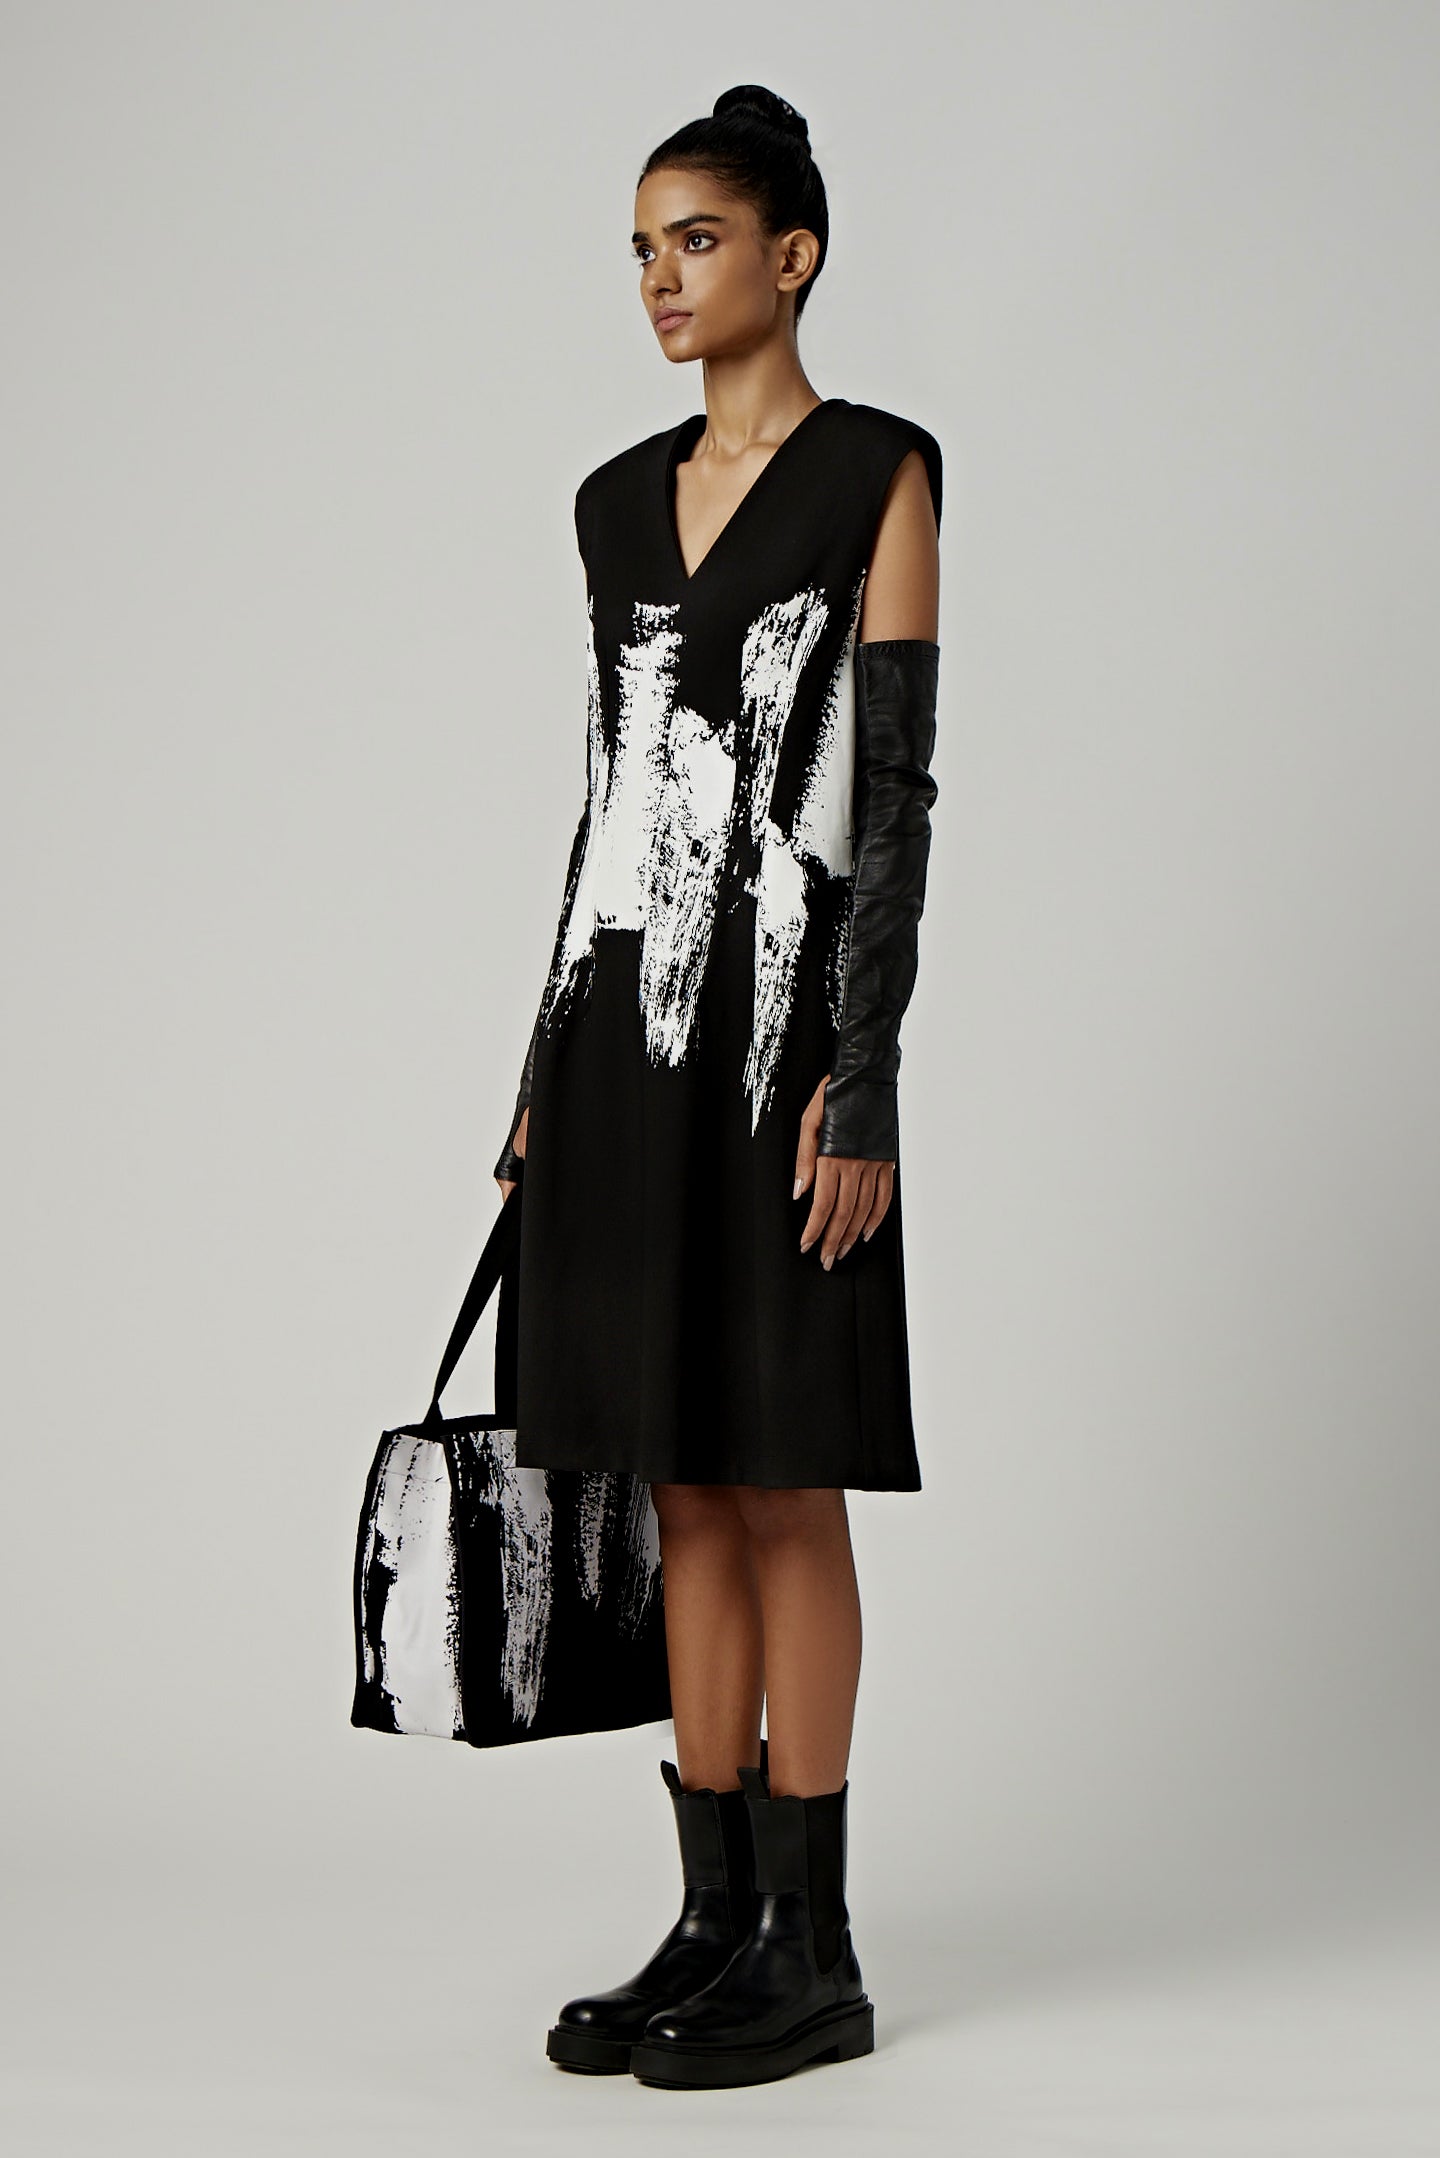 Slim Fit V-Neck Sleeveless Dress with Artistic Print